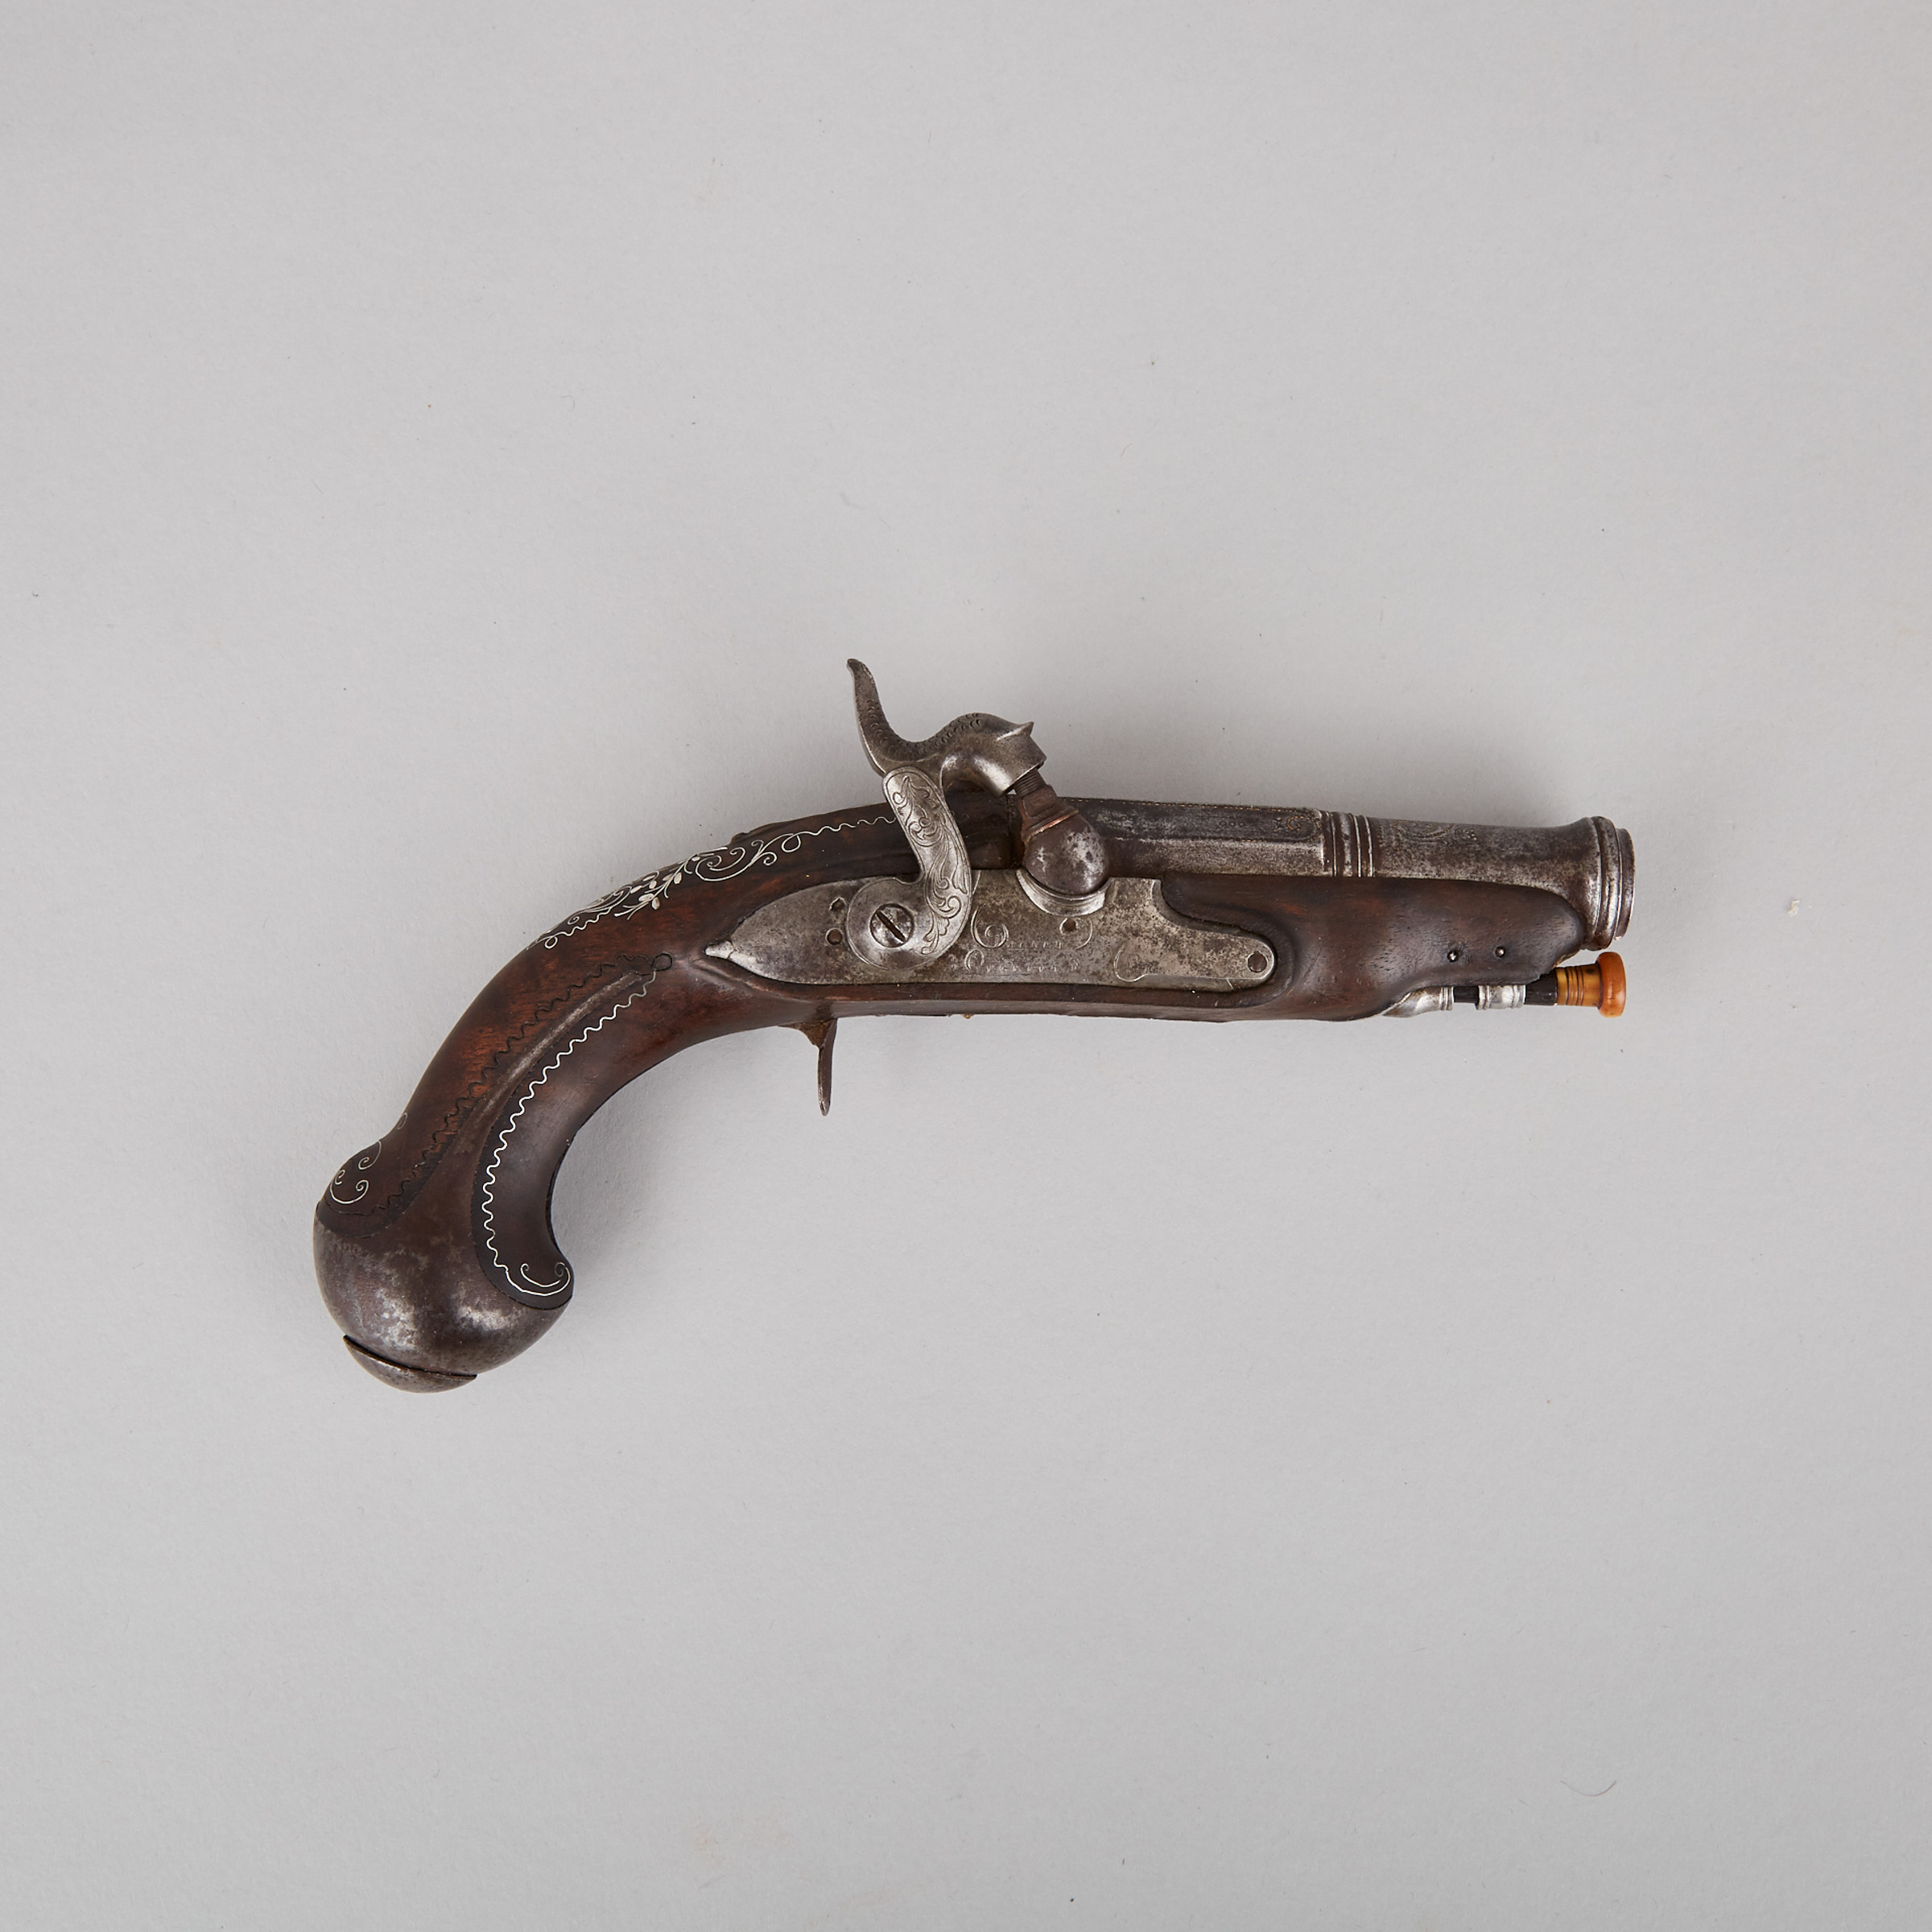 French Cannon Barrel Pistol, Carnet à Orgelet, mid 18th century